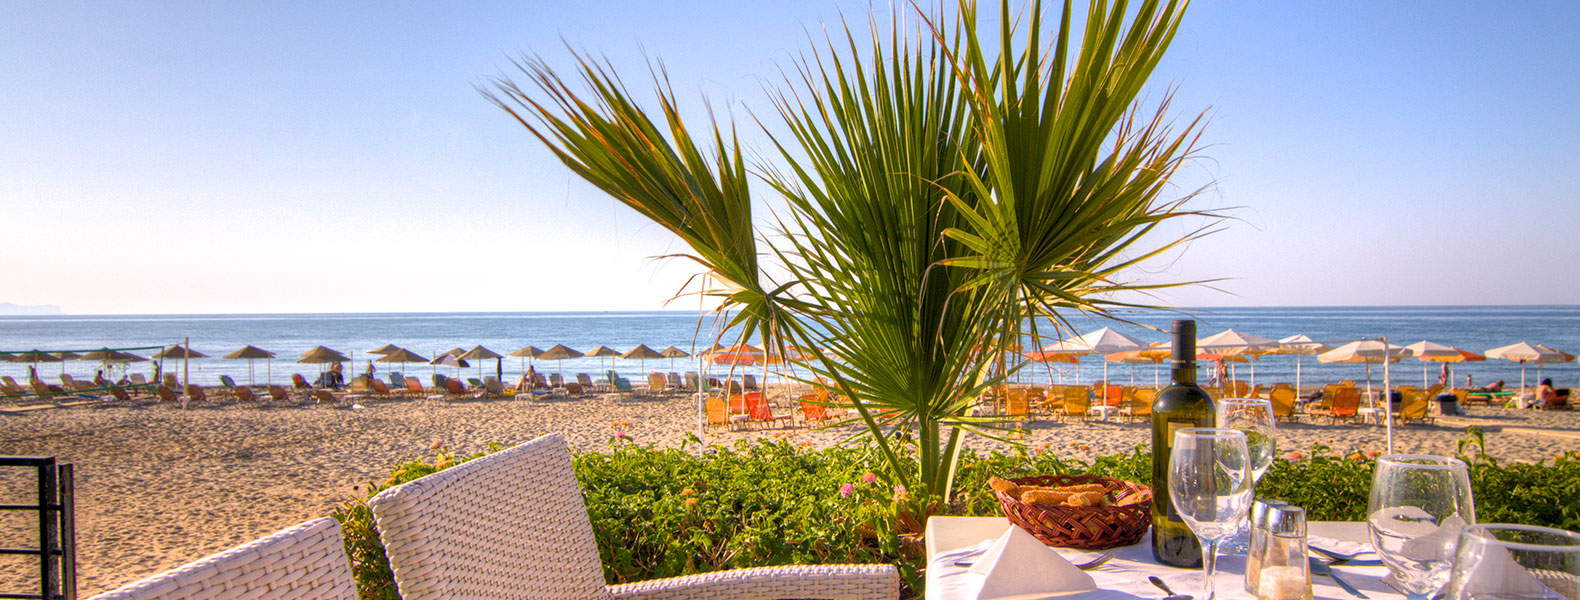 Dimitrios Village Beach Resort and Spa - Δείπνο δίπλα στη θάλασσα